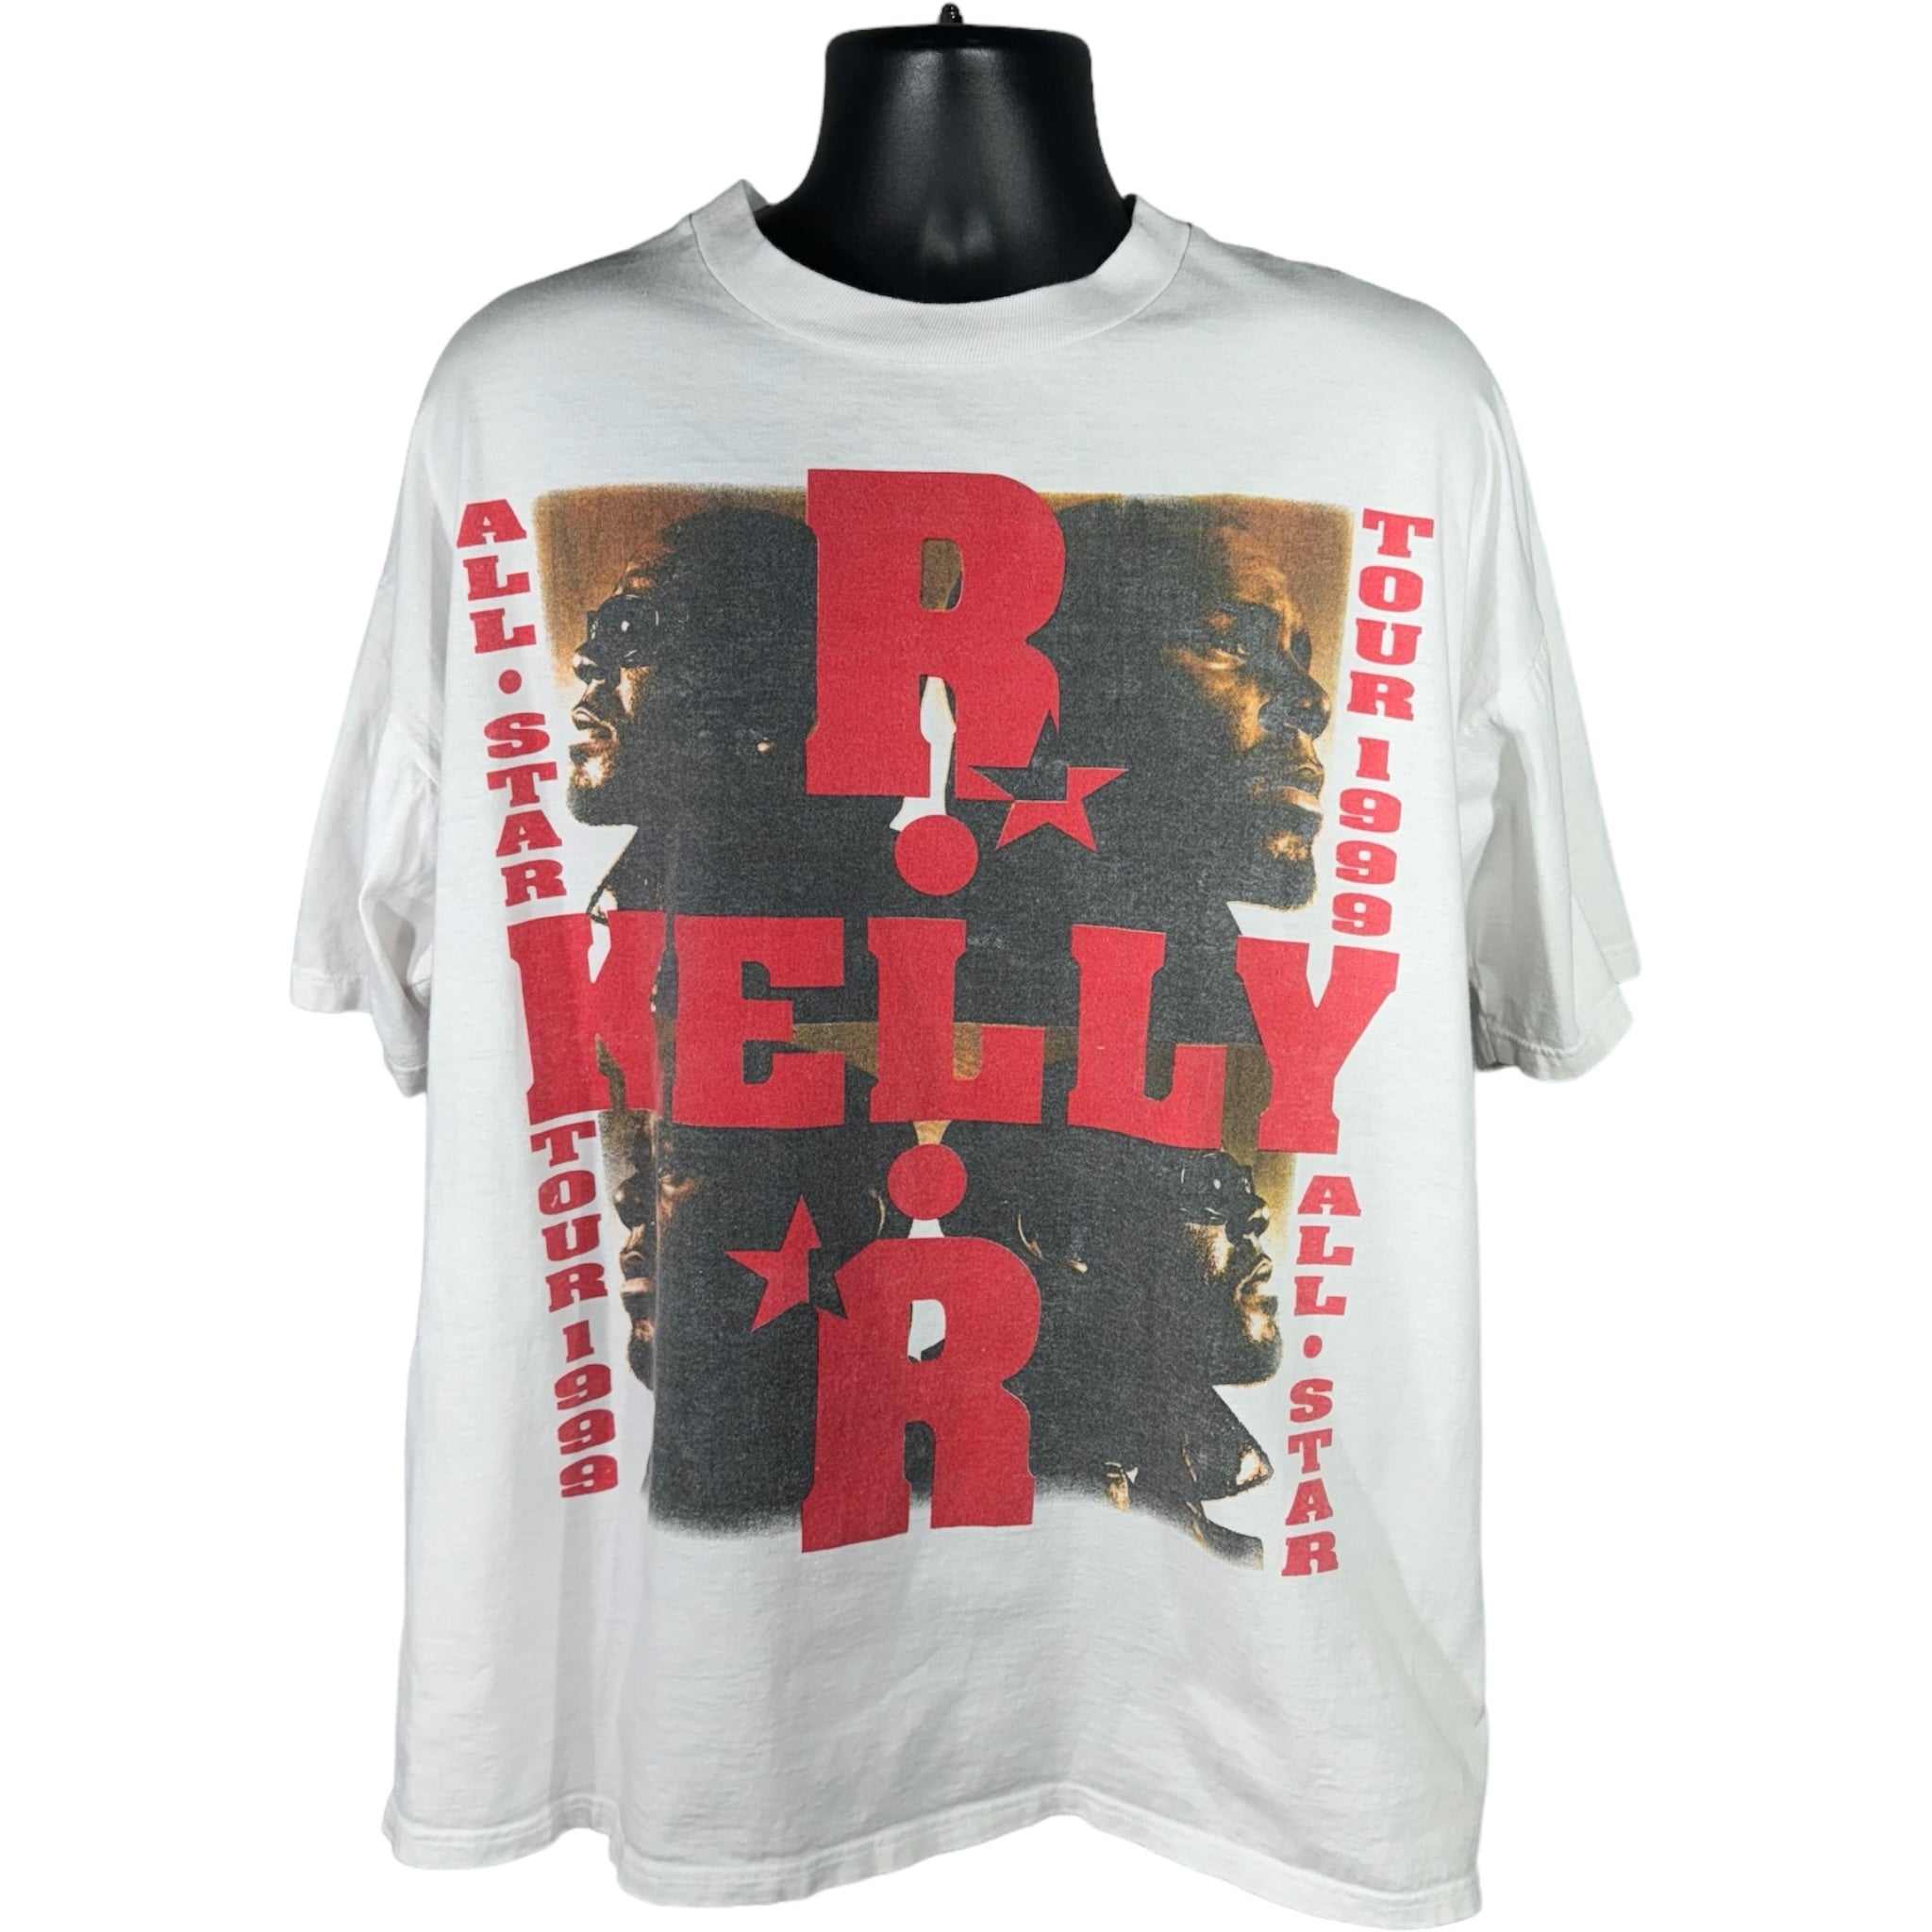 Vintage R. Kelly All Star Tour Tee 1999